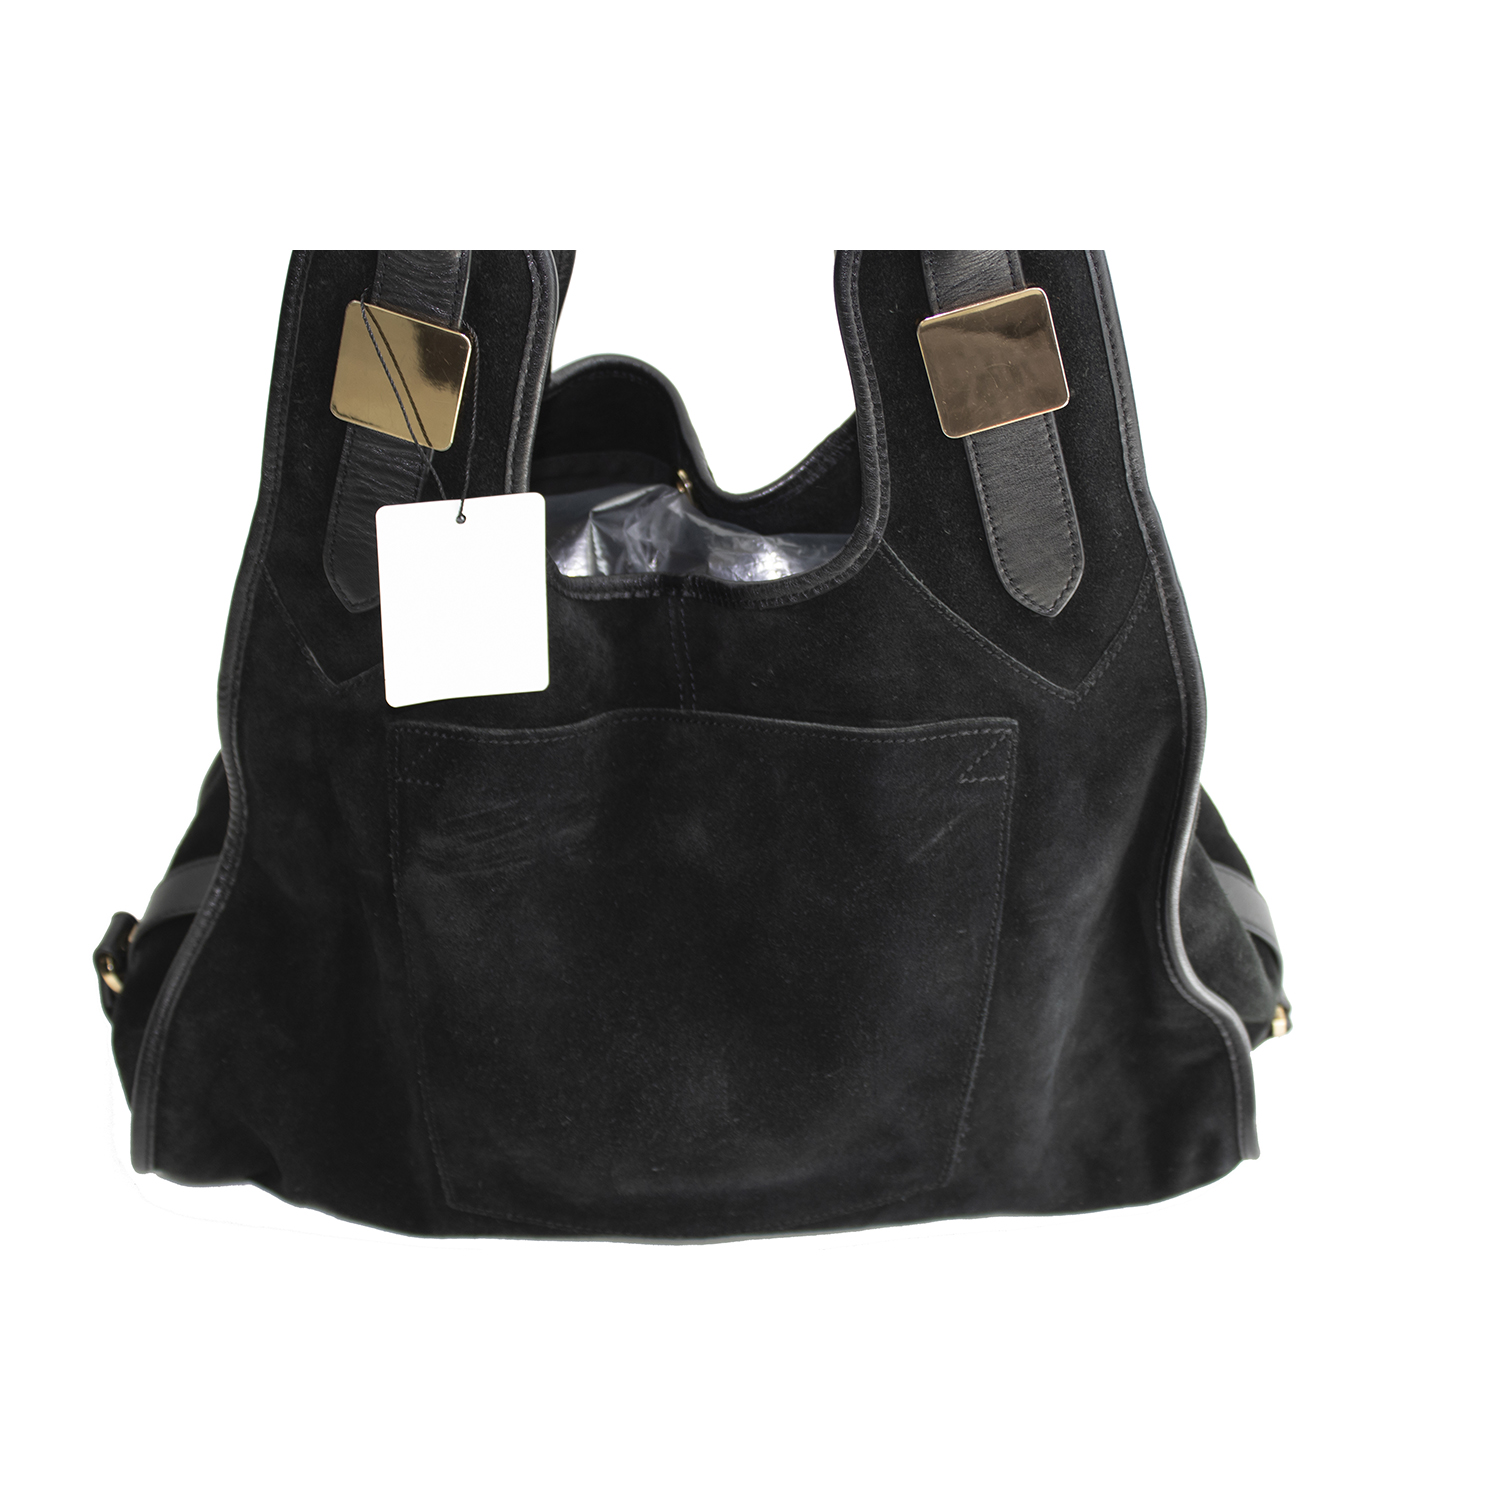 Zadig & Voltaire - Authenticated Rock Handbag - Suede Black Plain for Women, Very Good Condition